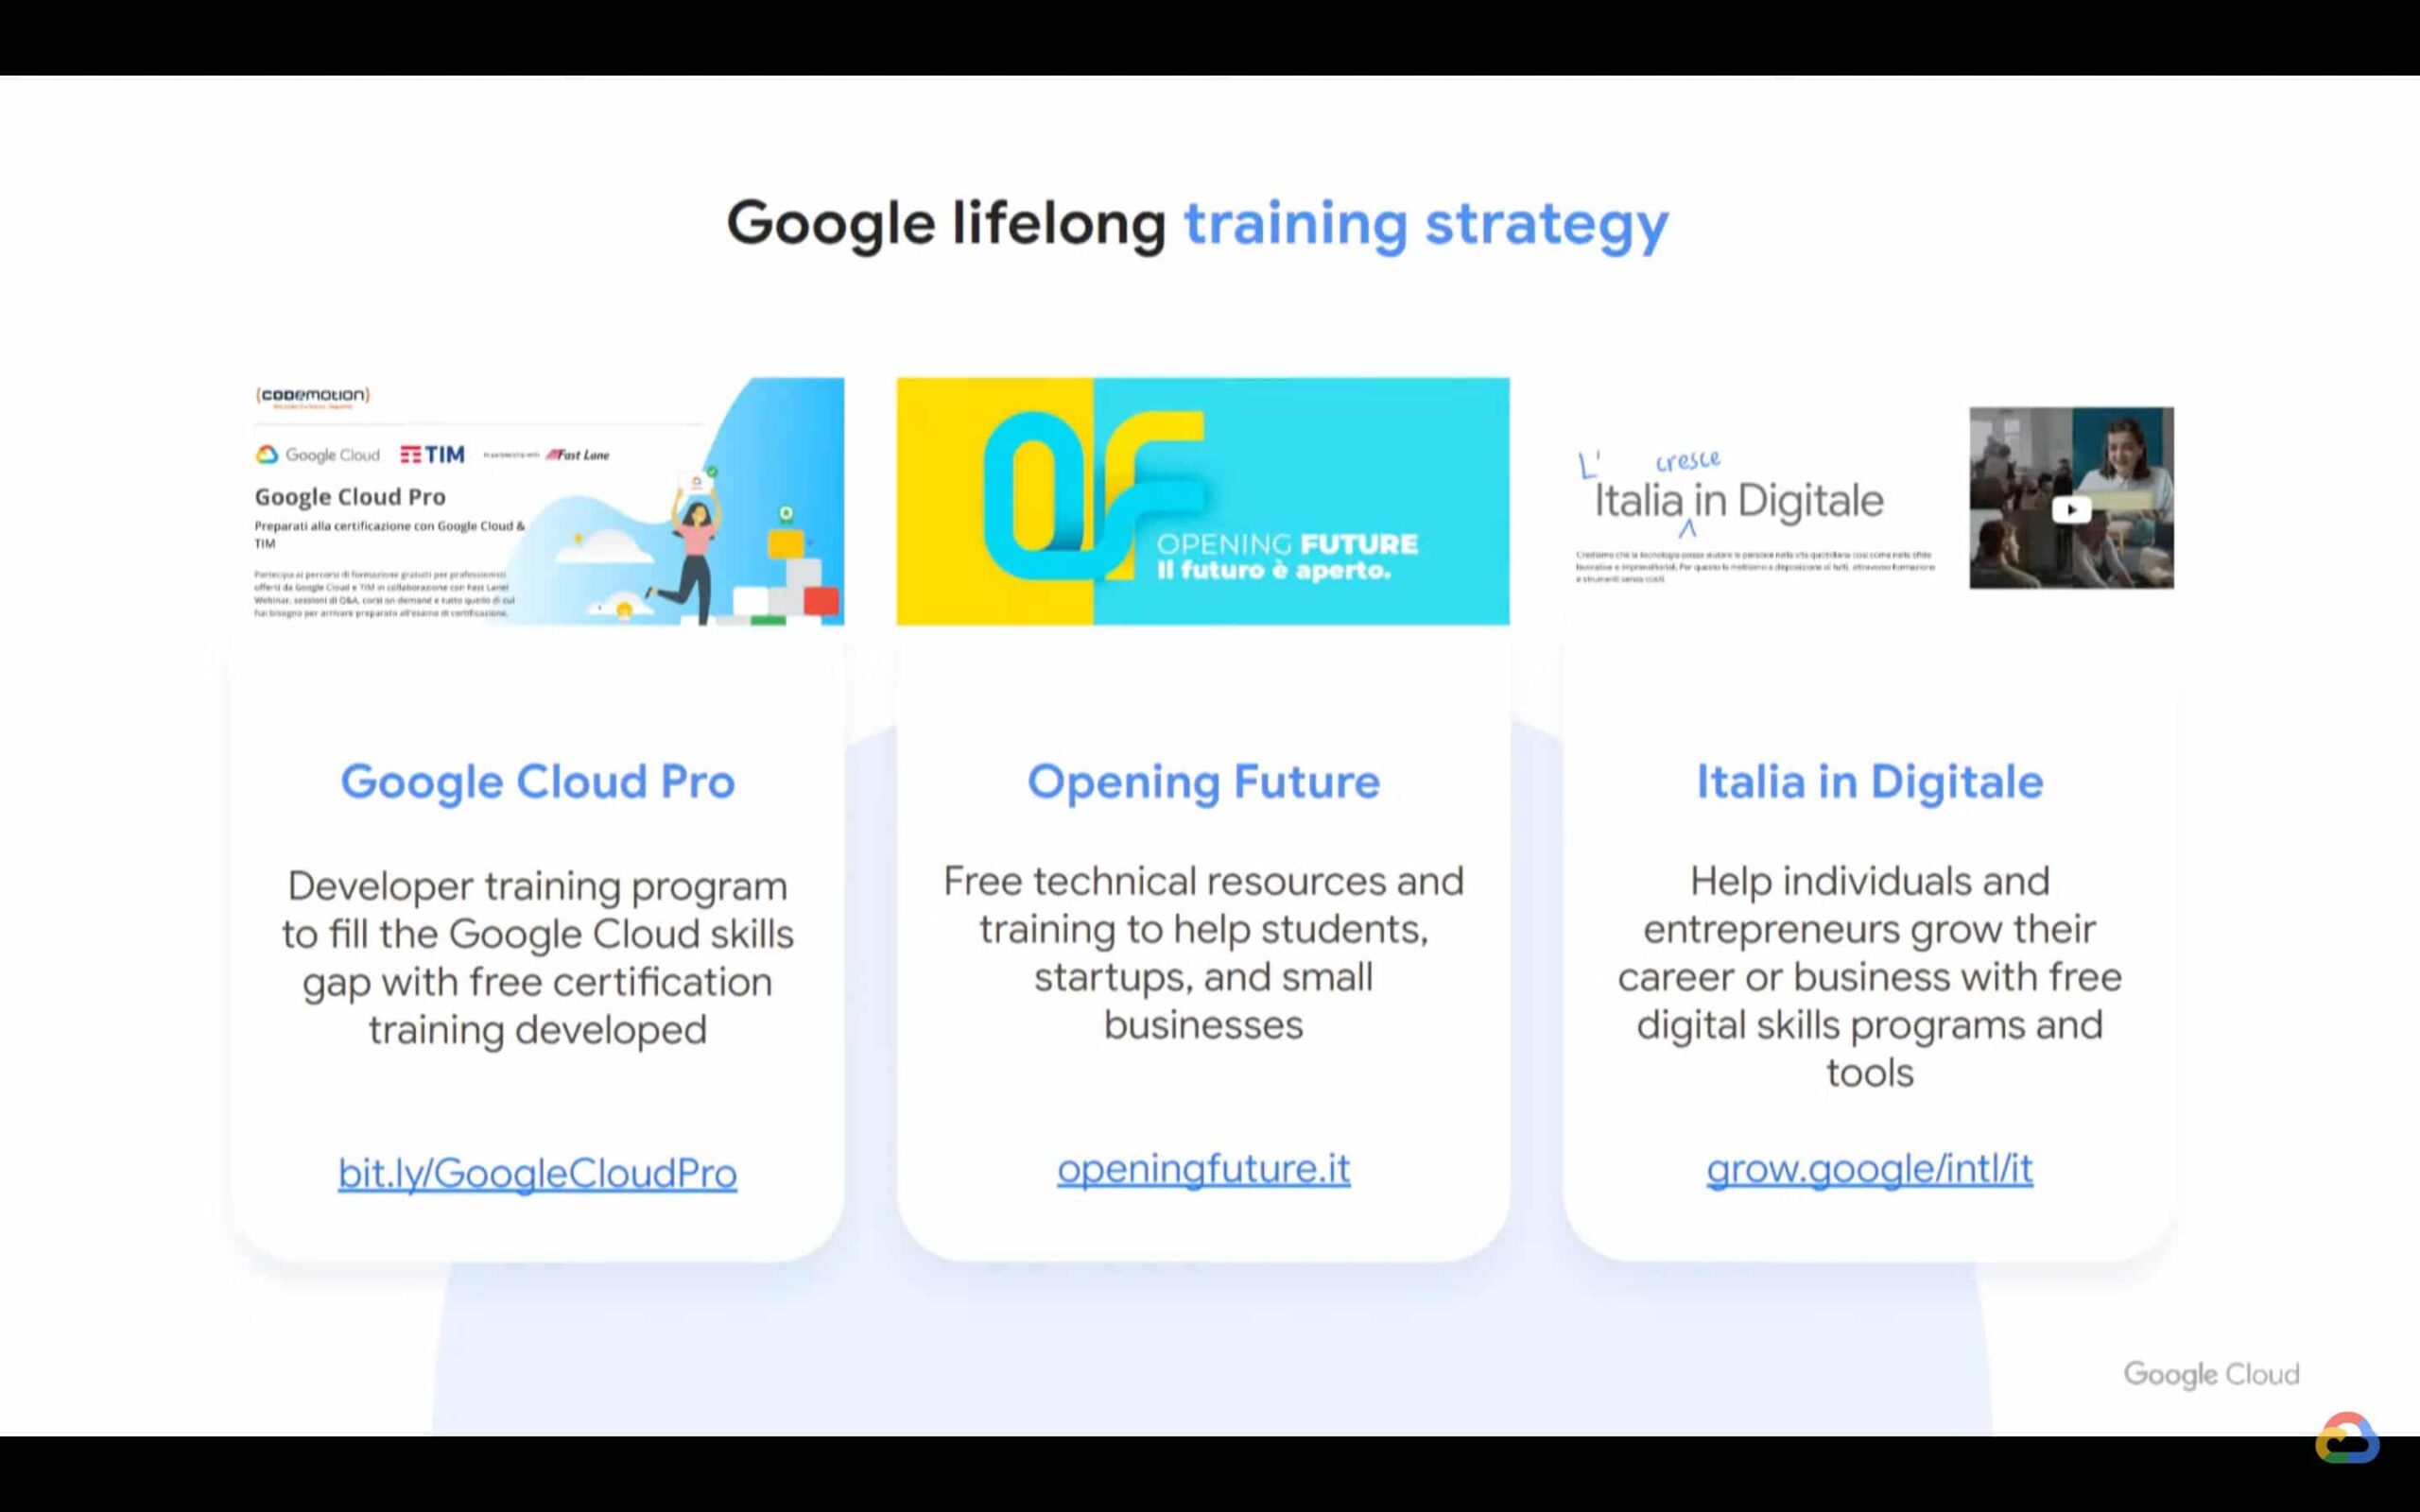 Google lifelong training strategy